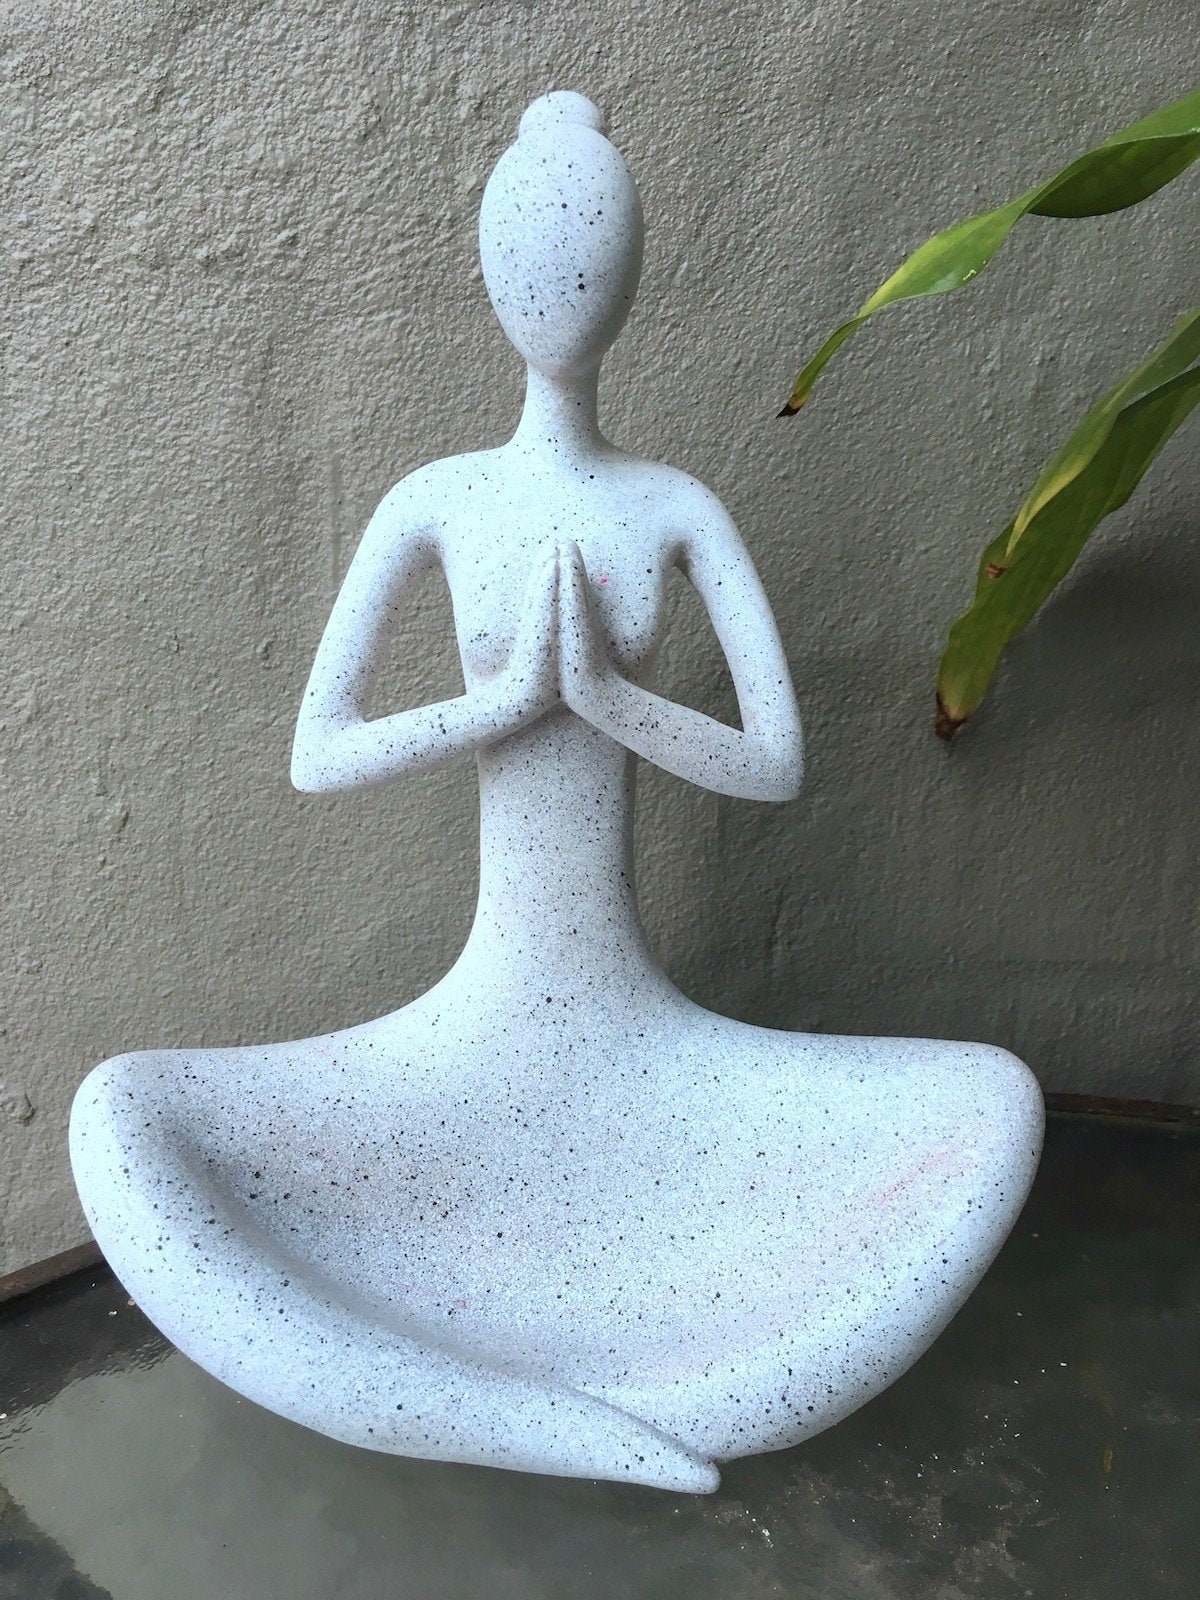 Large 25cm Yoga Figurine Ornament - Praying Pose, White - Blue